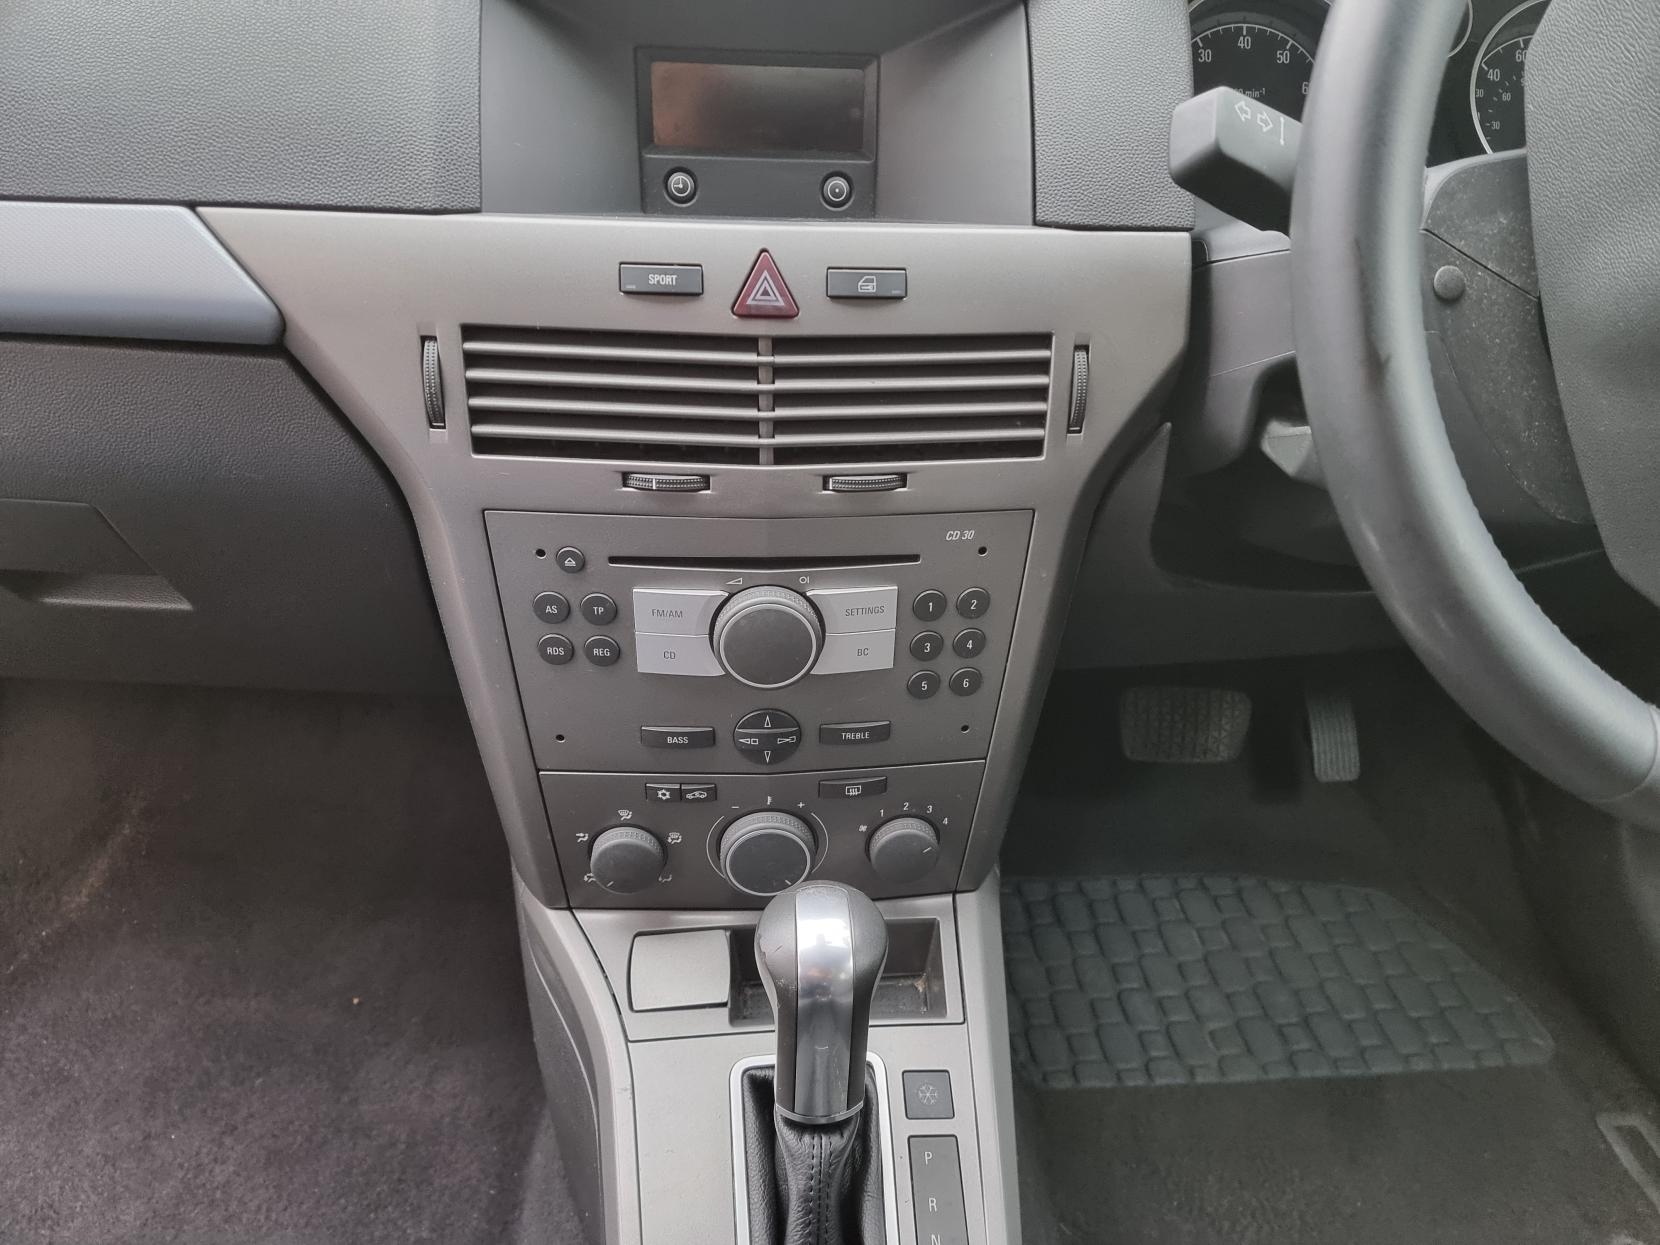 Vauxhall Astra 1.8i 16v Design Hatchback 5dr Petrol Automatic (197 g/km, 123 bhp)